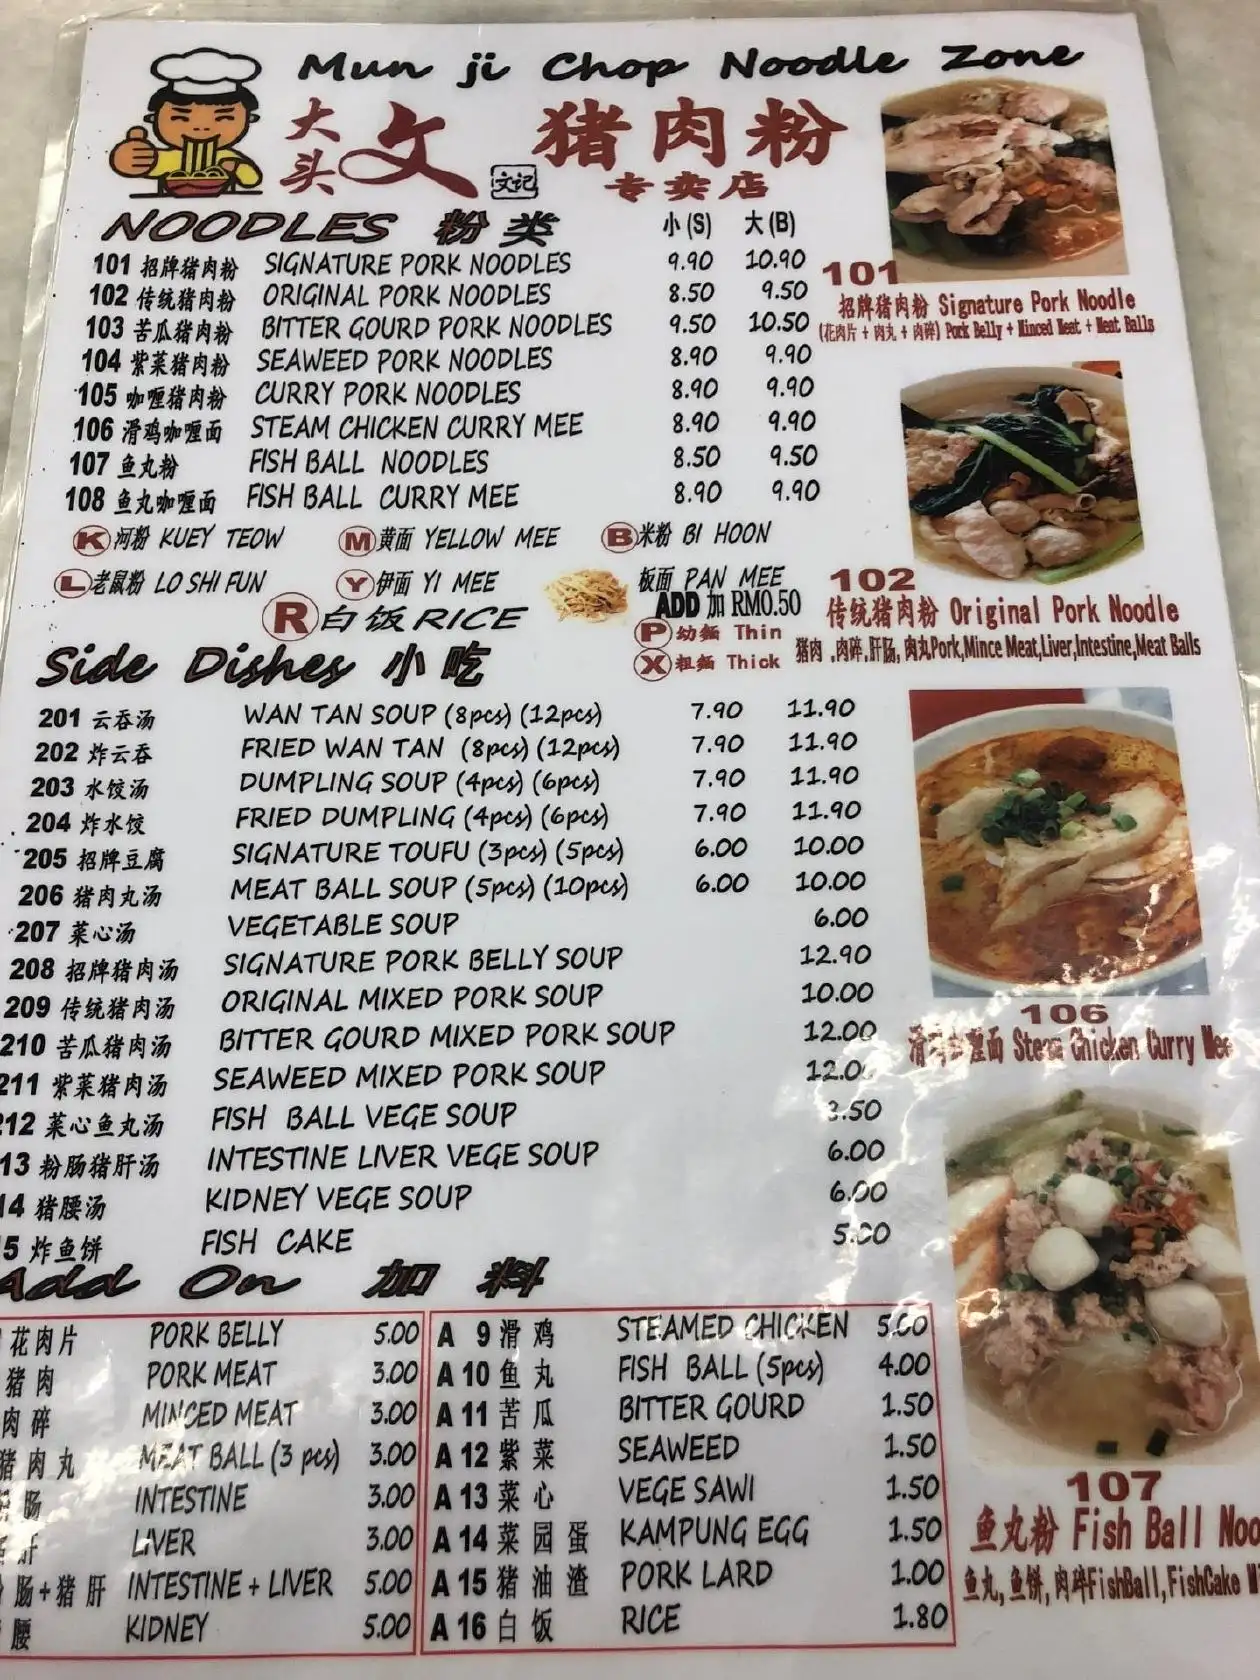 Restoran Mun Ji Chop Noodle Zone (Bandar Puteri Puchong)